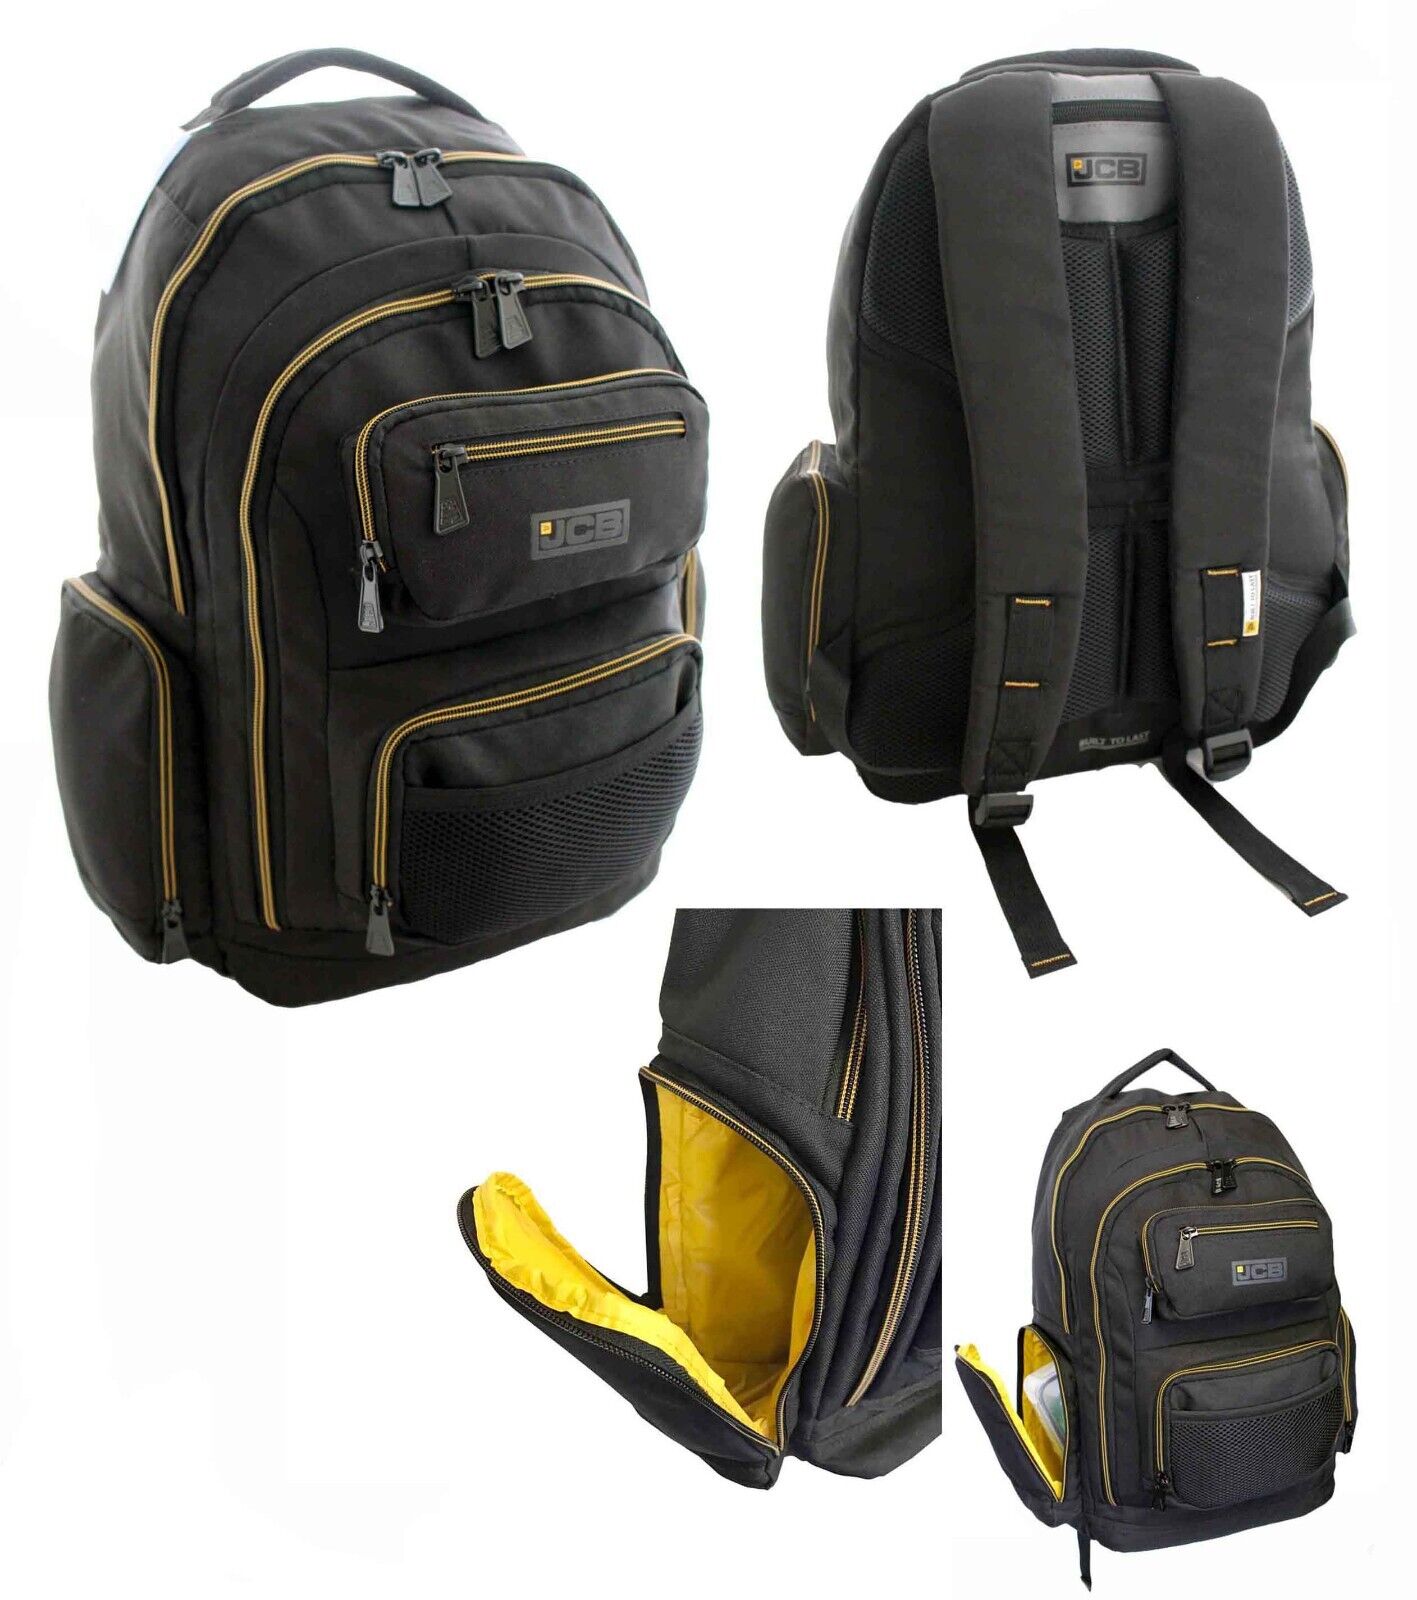 JCB Backpack Rucksack Bag School Travel Large Sports Hiking Unisex Laptop